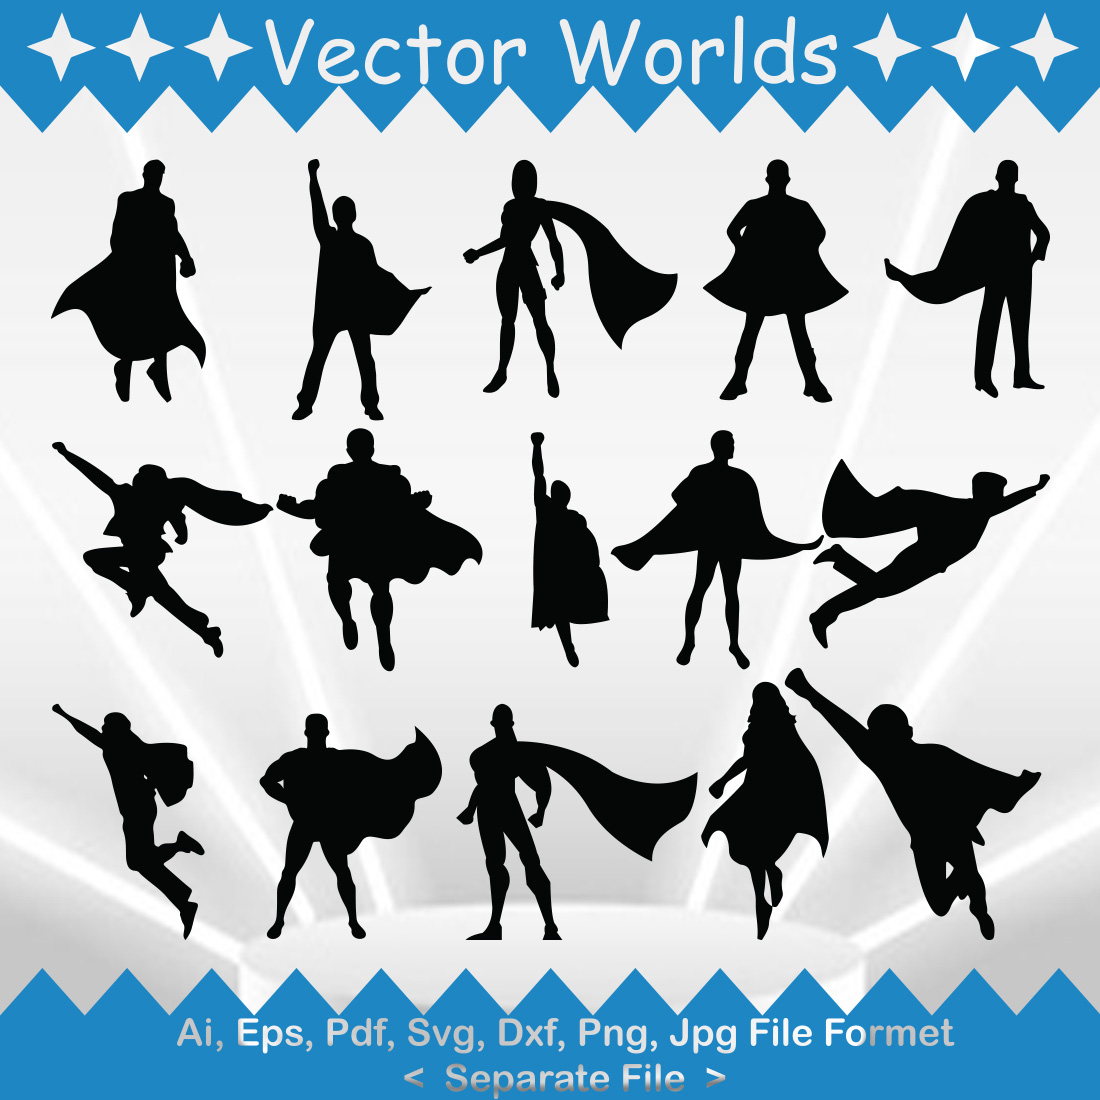 Super Hero SVG Vector Design cover image.